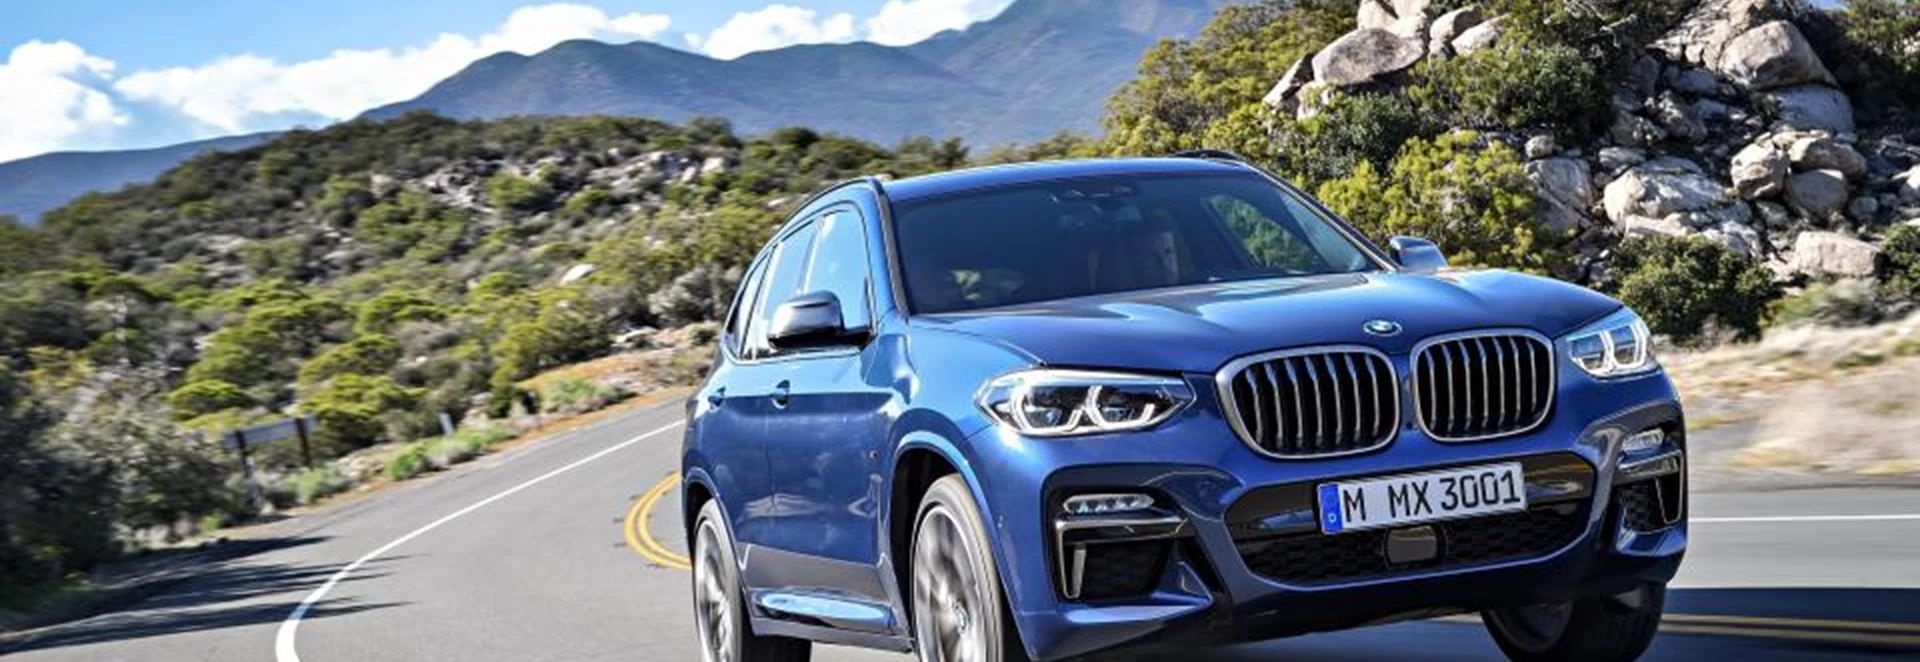 BMW Scrappage Scheme 2018: How does it work and do I qualify?